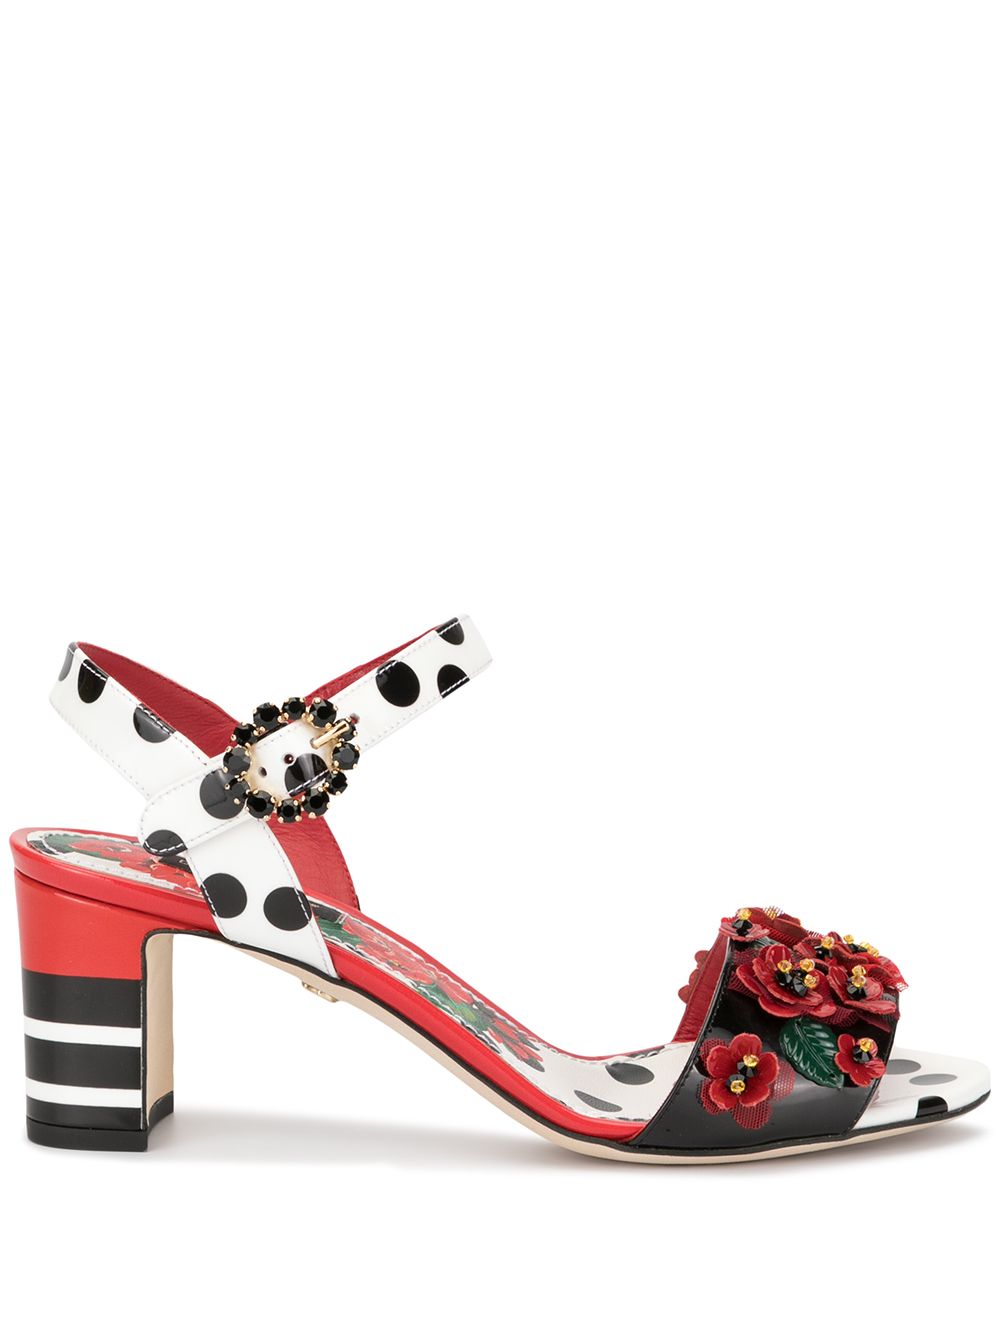 Dolce & Gabbana Floral Embellished Sandals - Farfetch